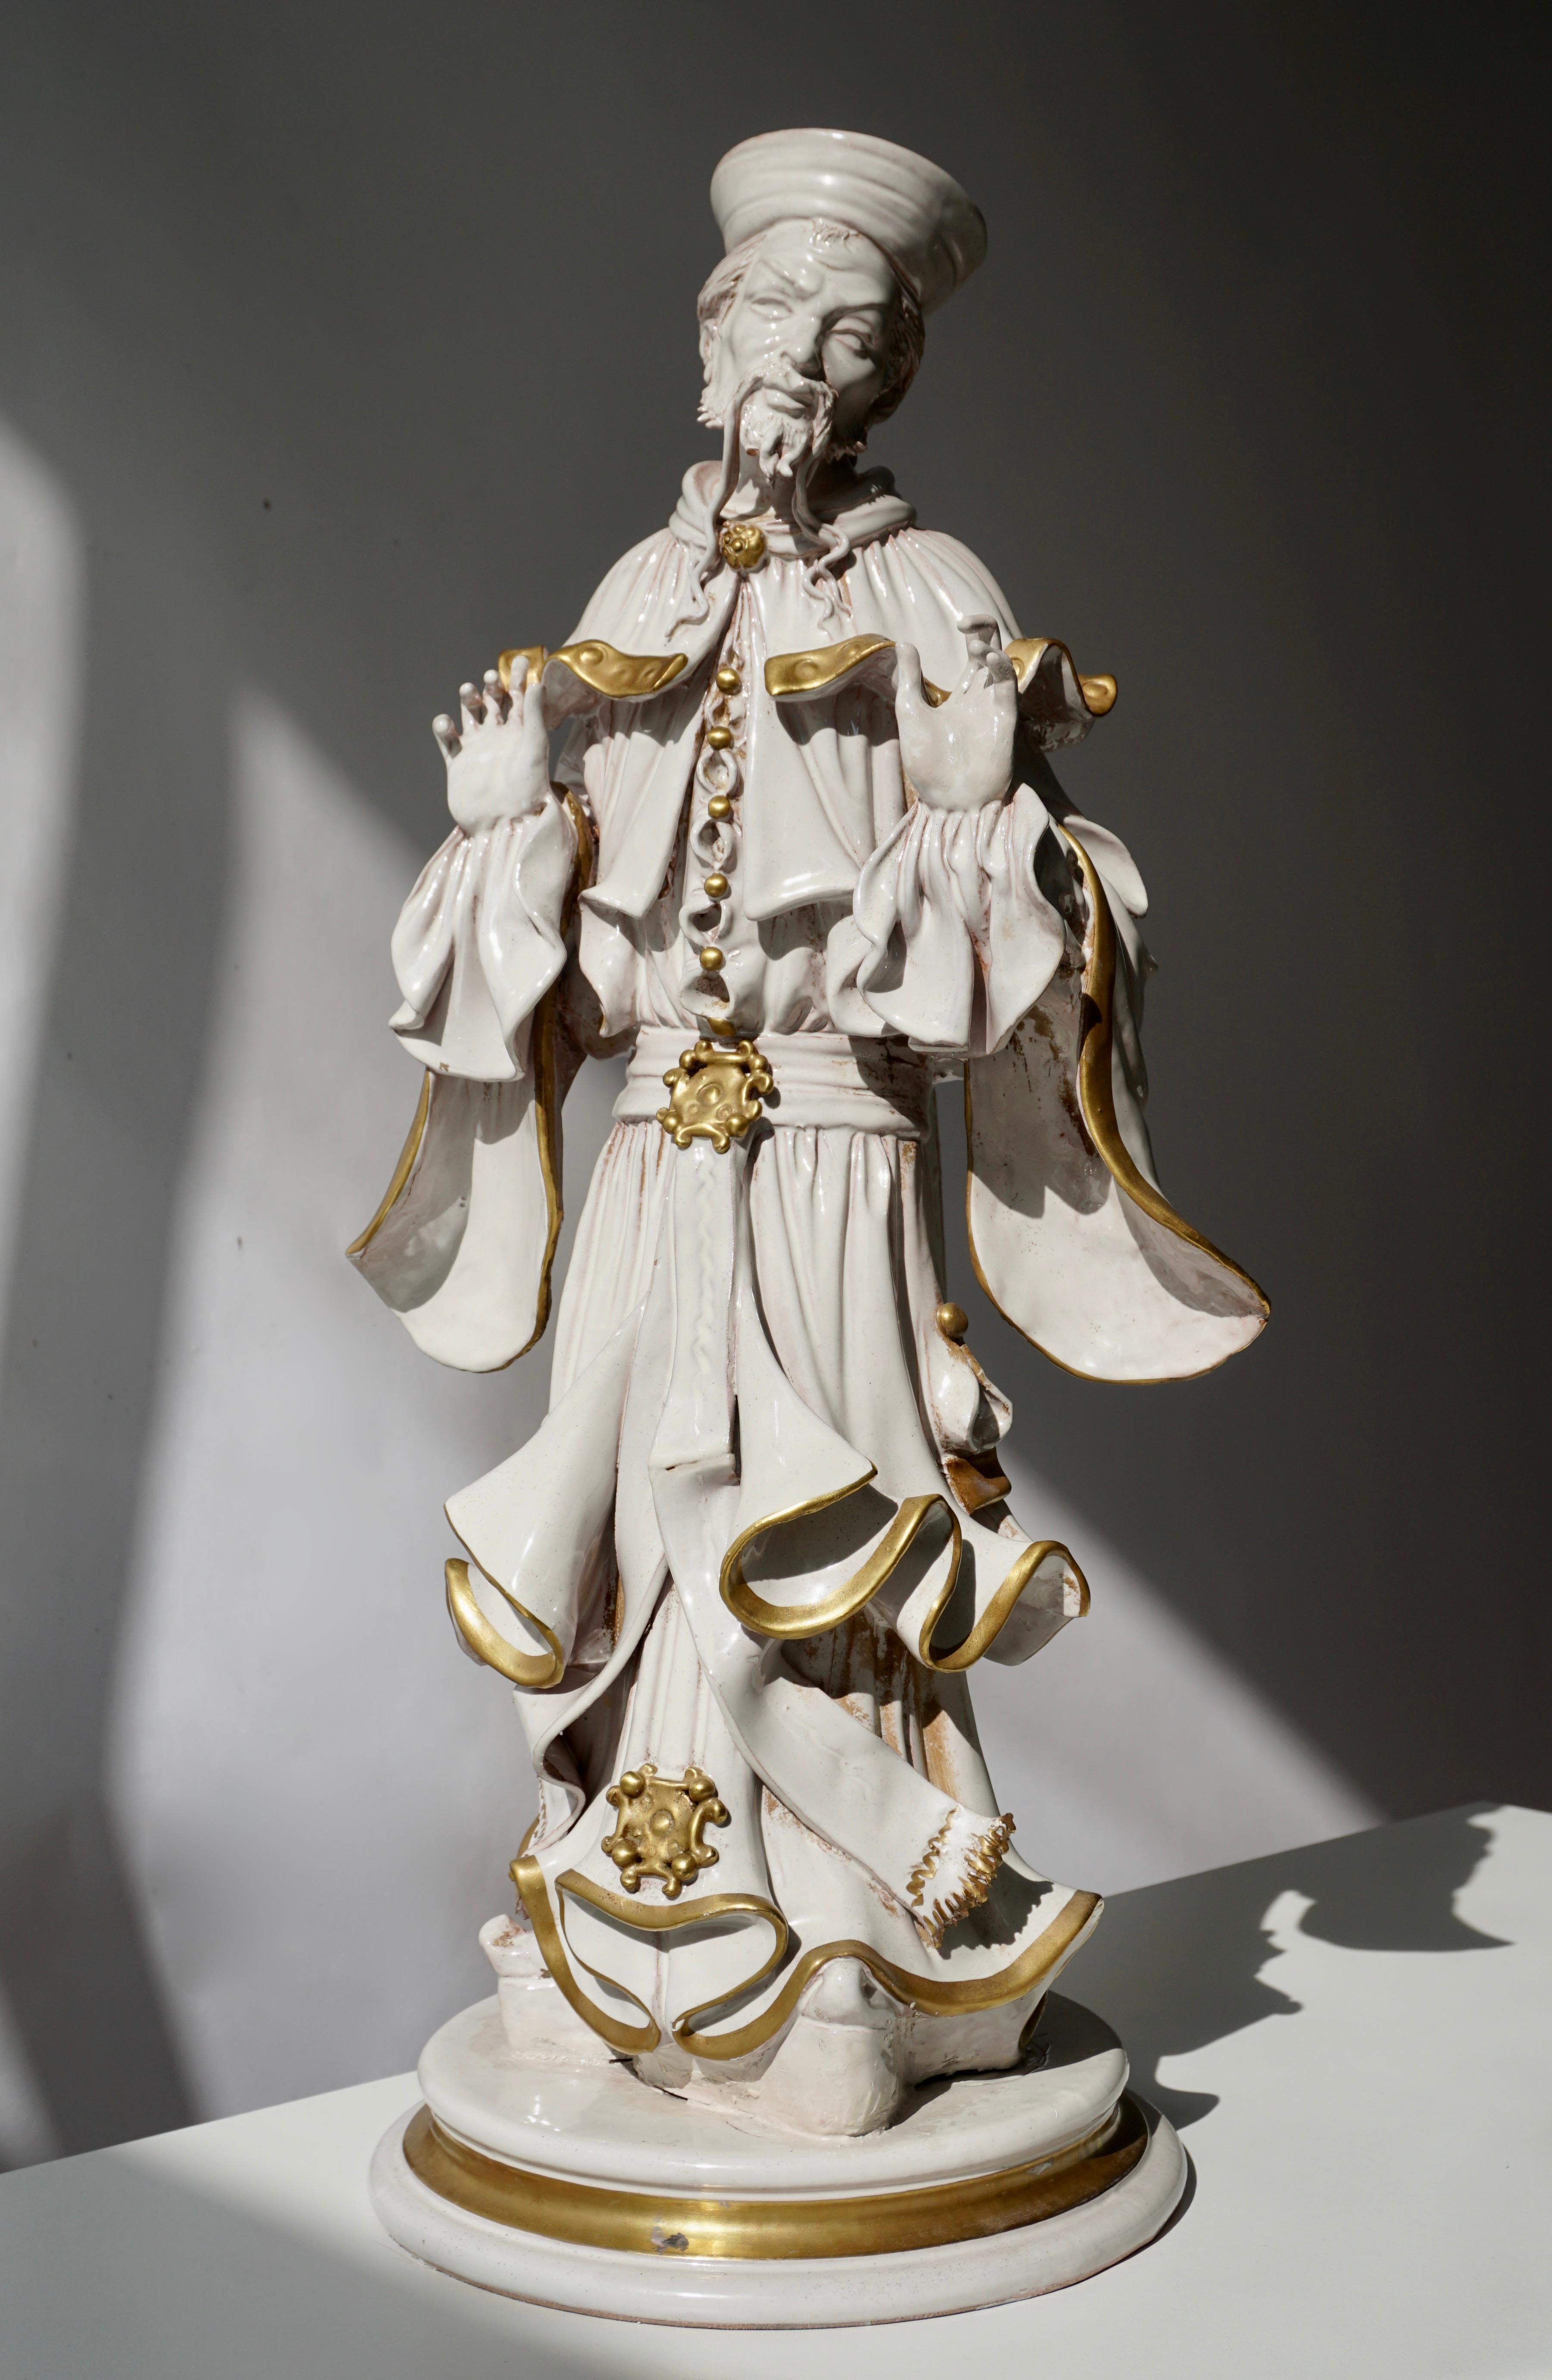 Italian porcelain sculpture.
Measures: Height 56 cm.
Width 26 cm.
Depth 22 cm.